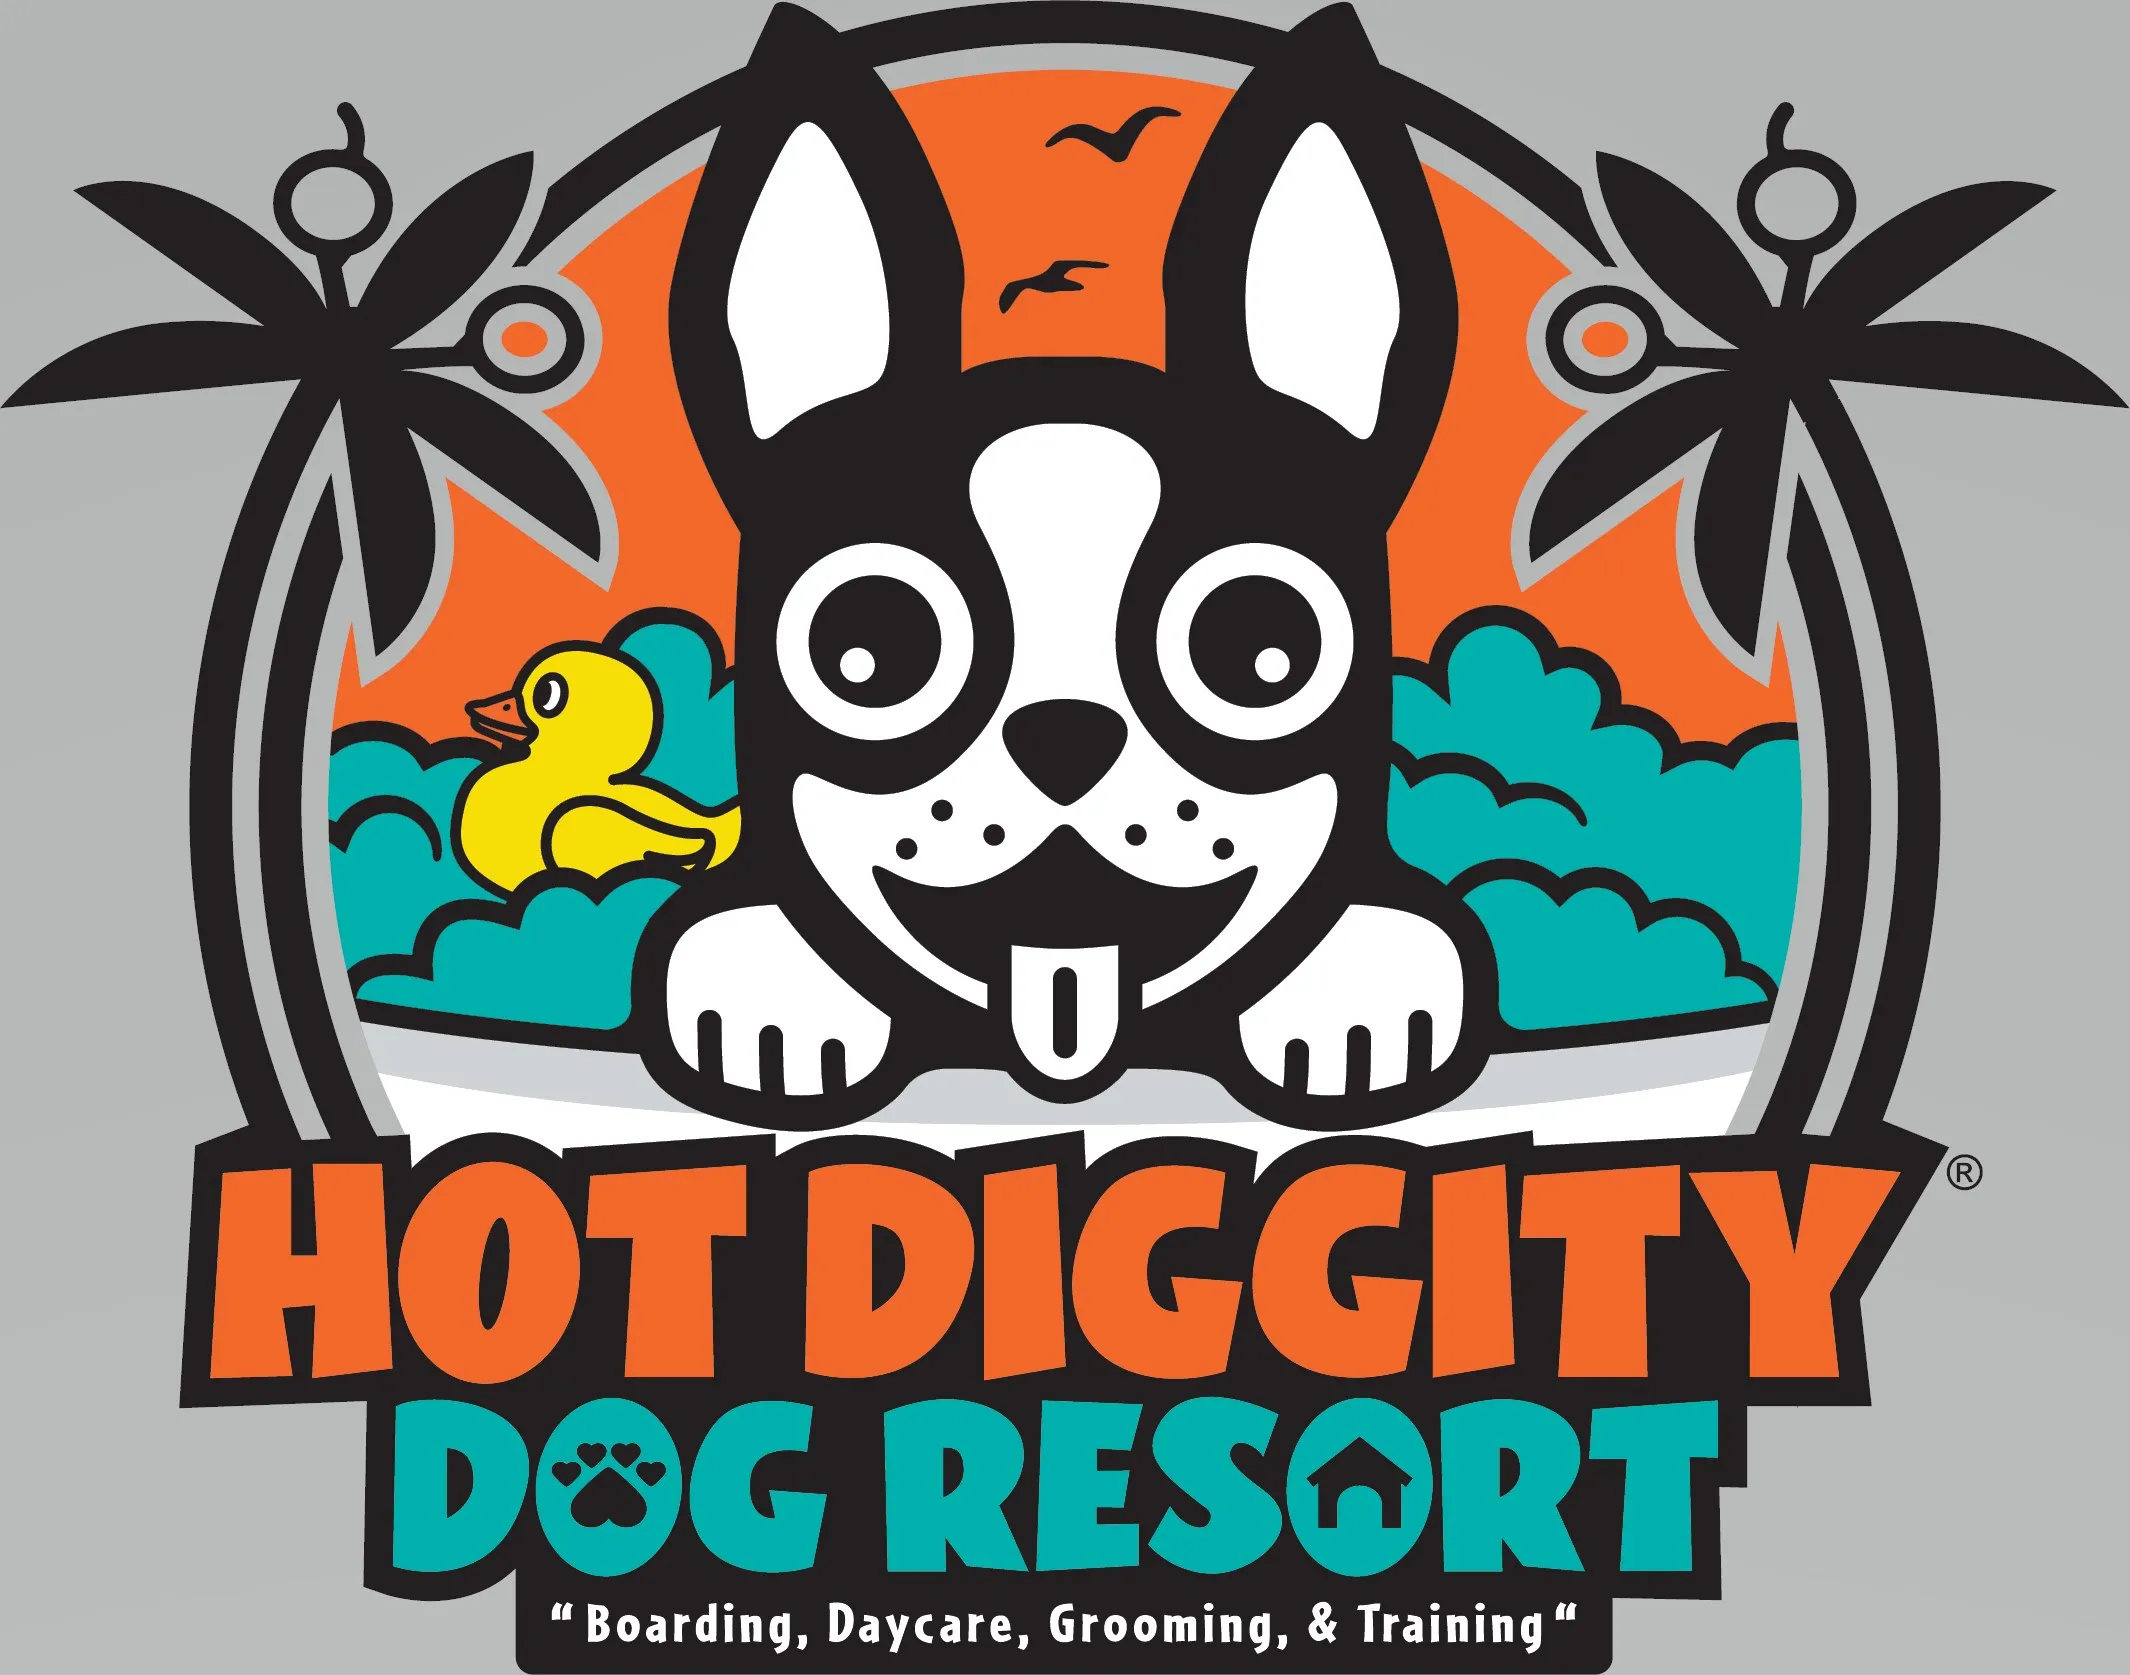 Hot Diggity Dog Resort logo